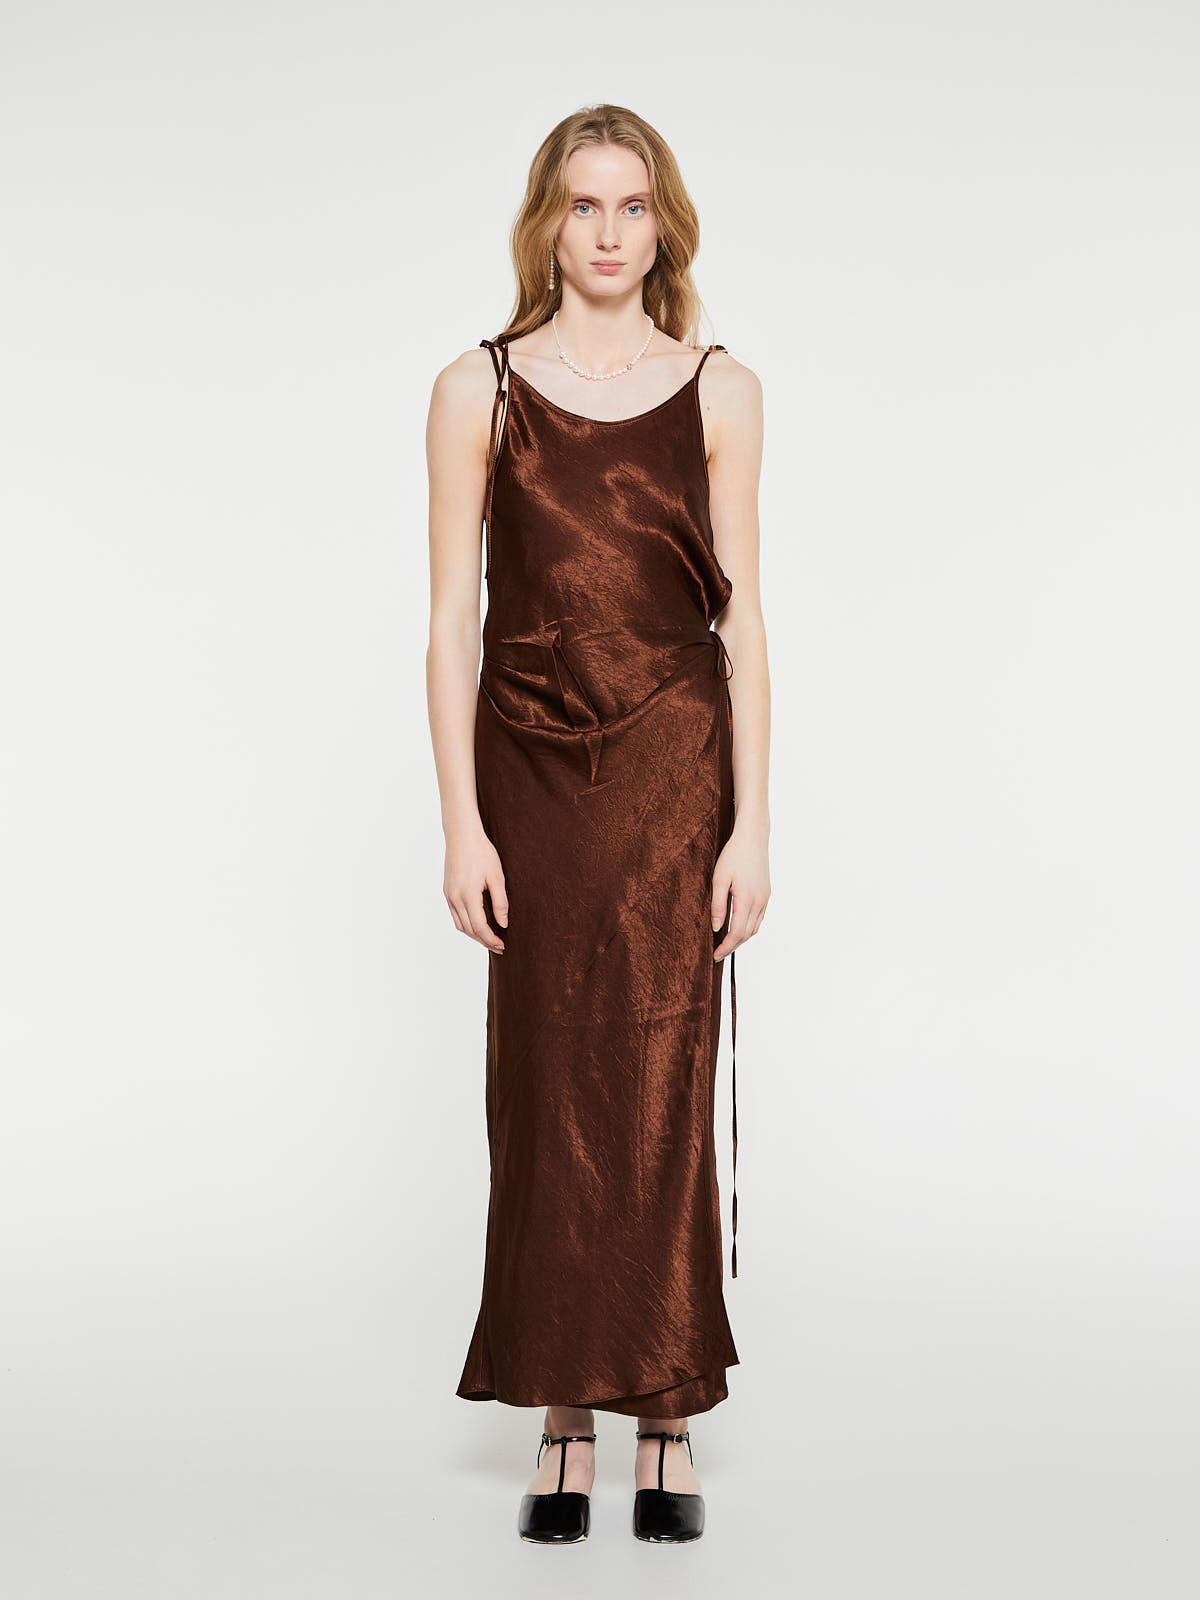 Acne Studios - Satin Strap Dress in Chocolate Brown